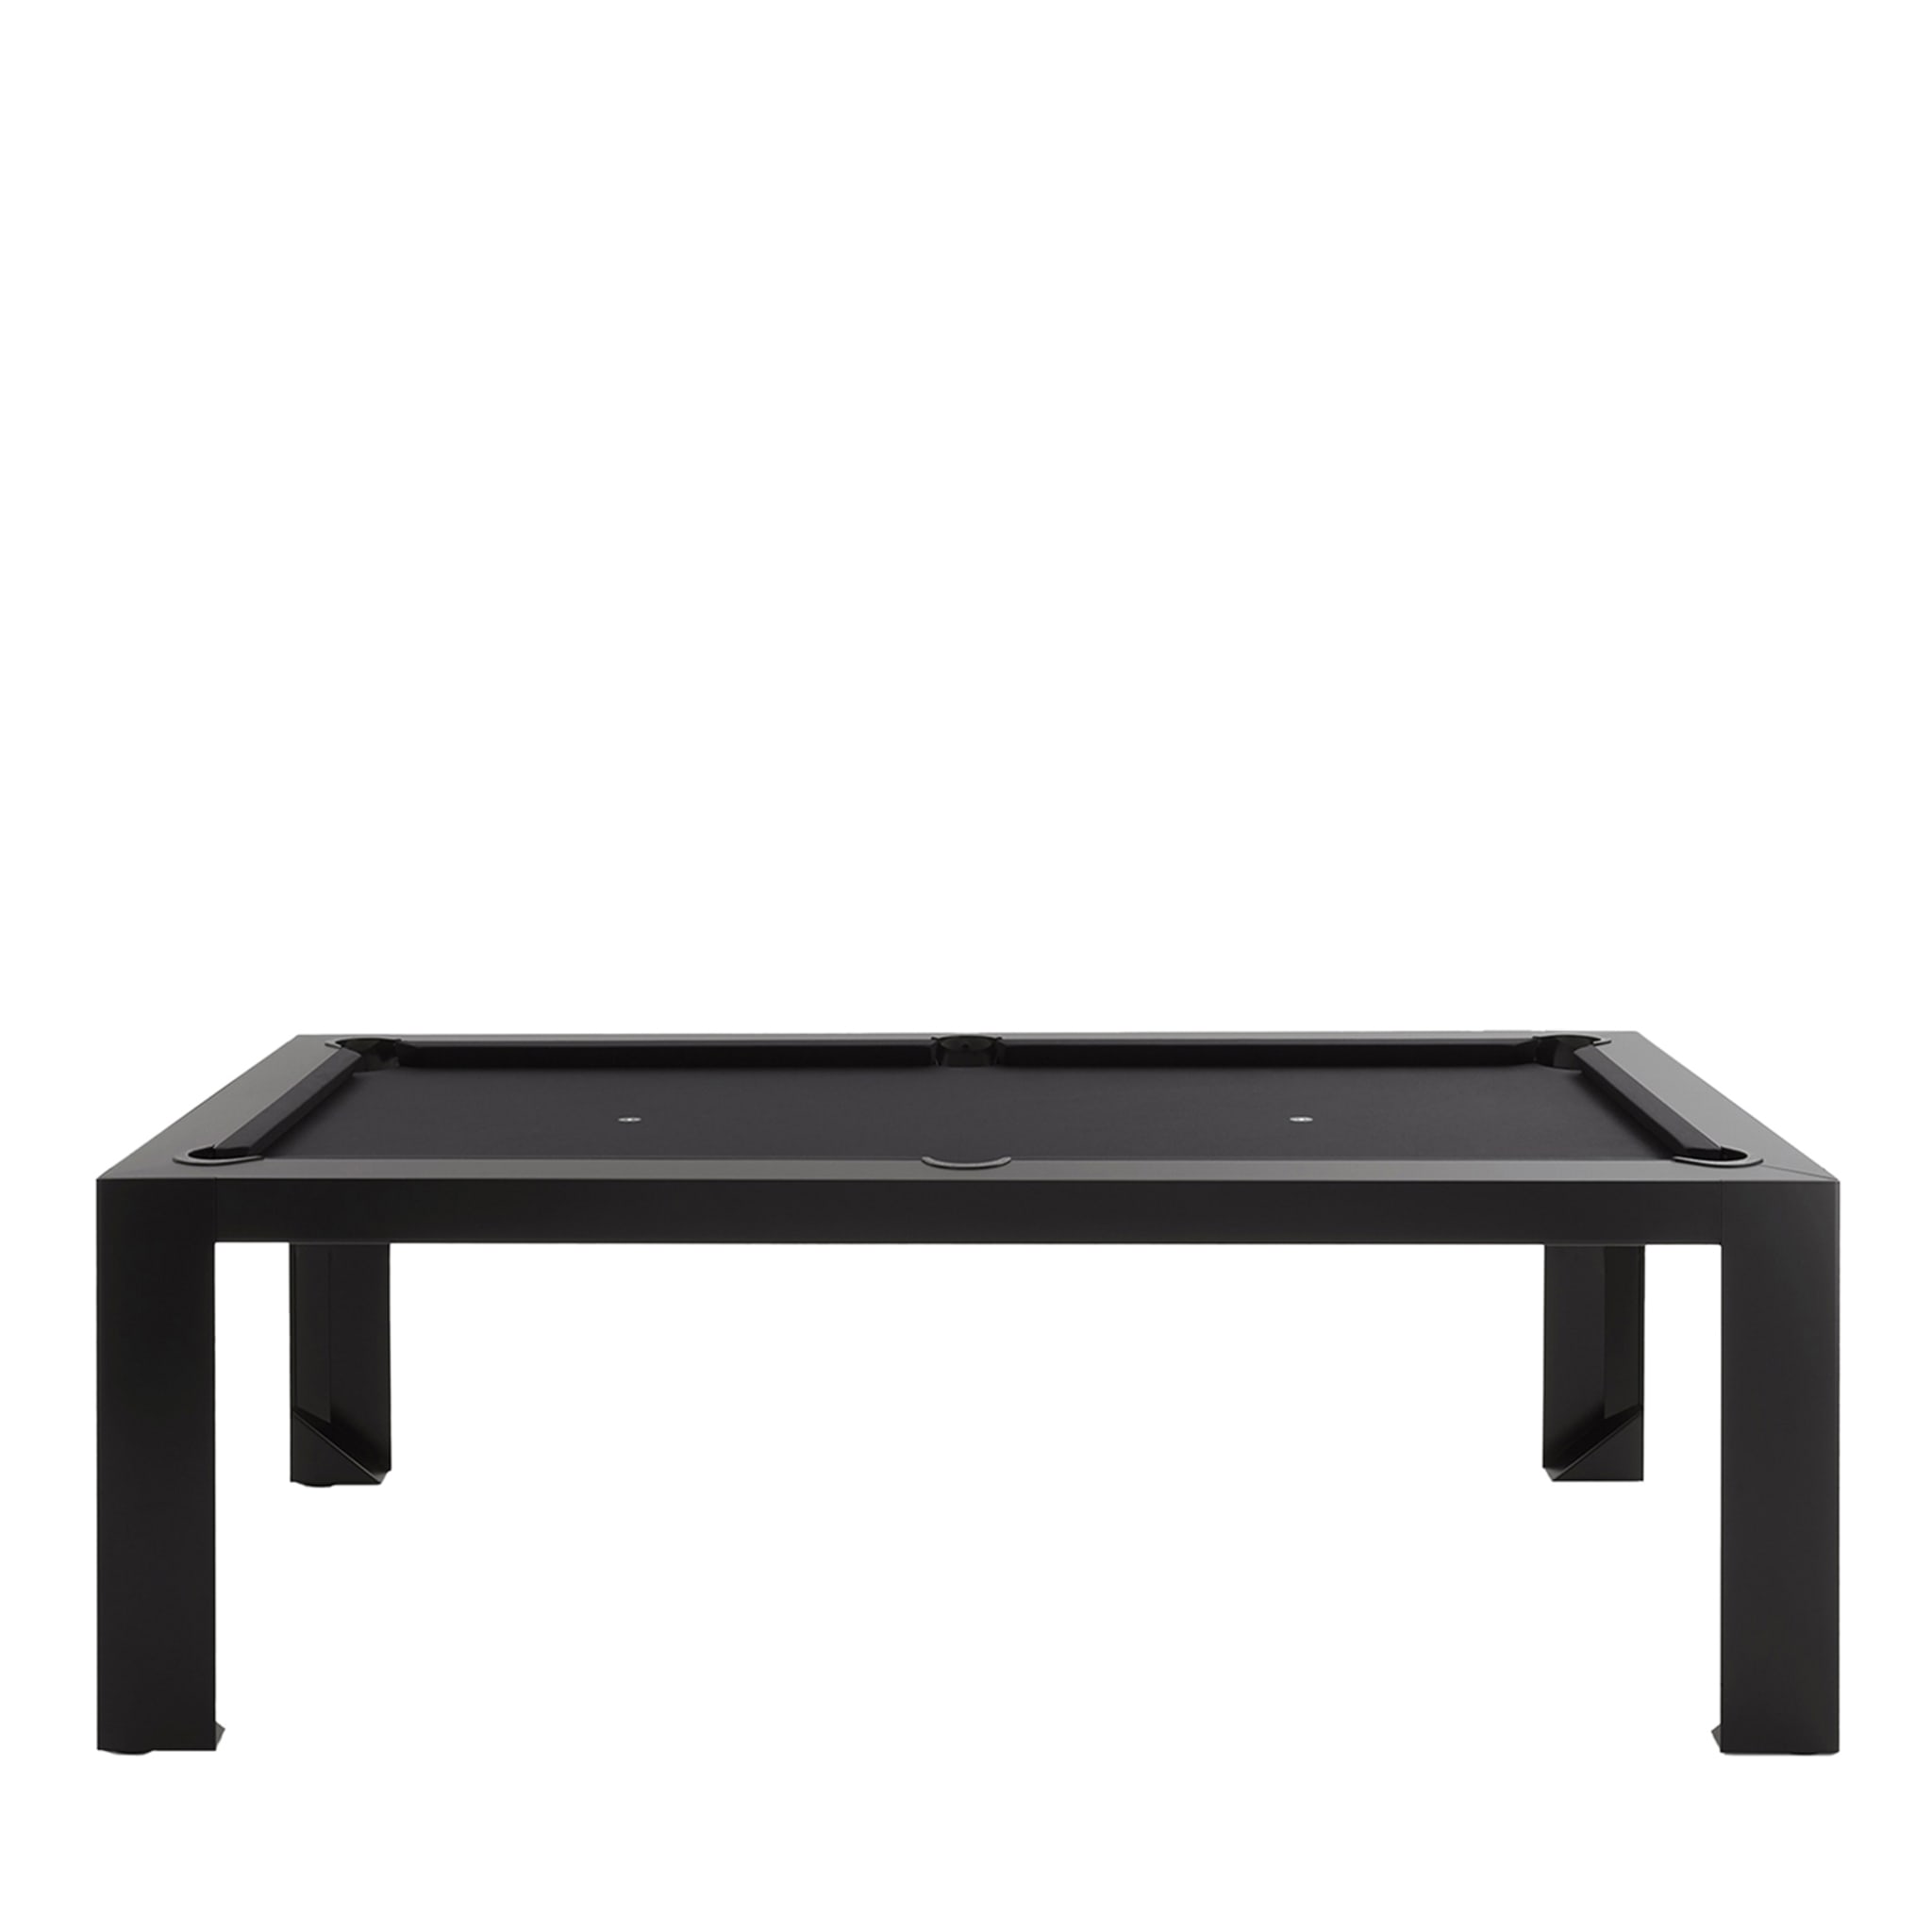 Carambola Cubista 7' Black Pool Table by Basaglia + Rota Nodari - Main view